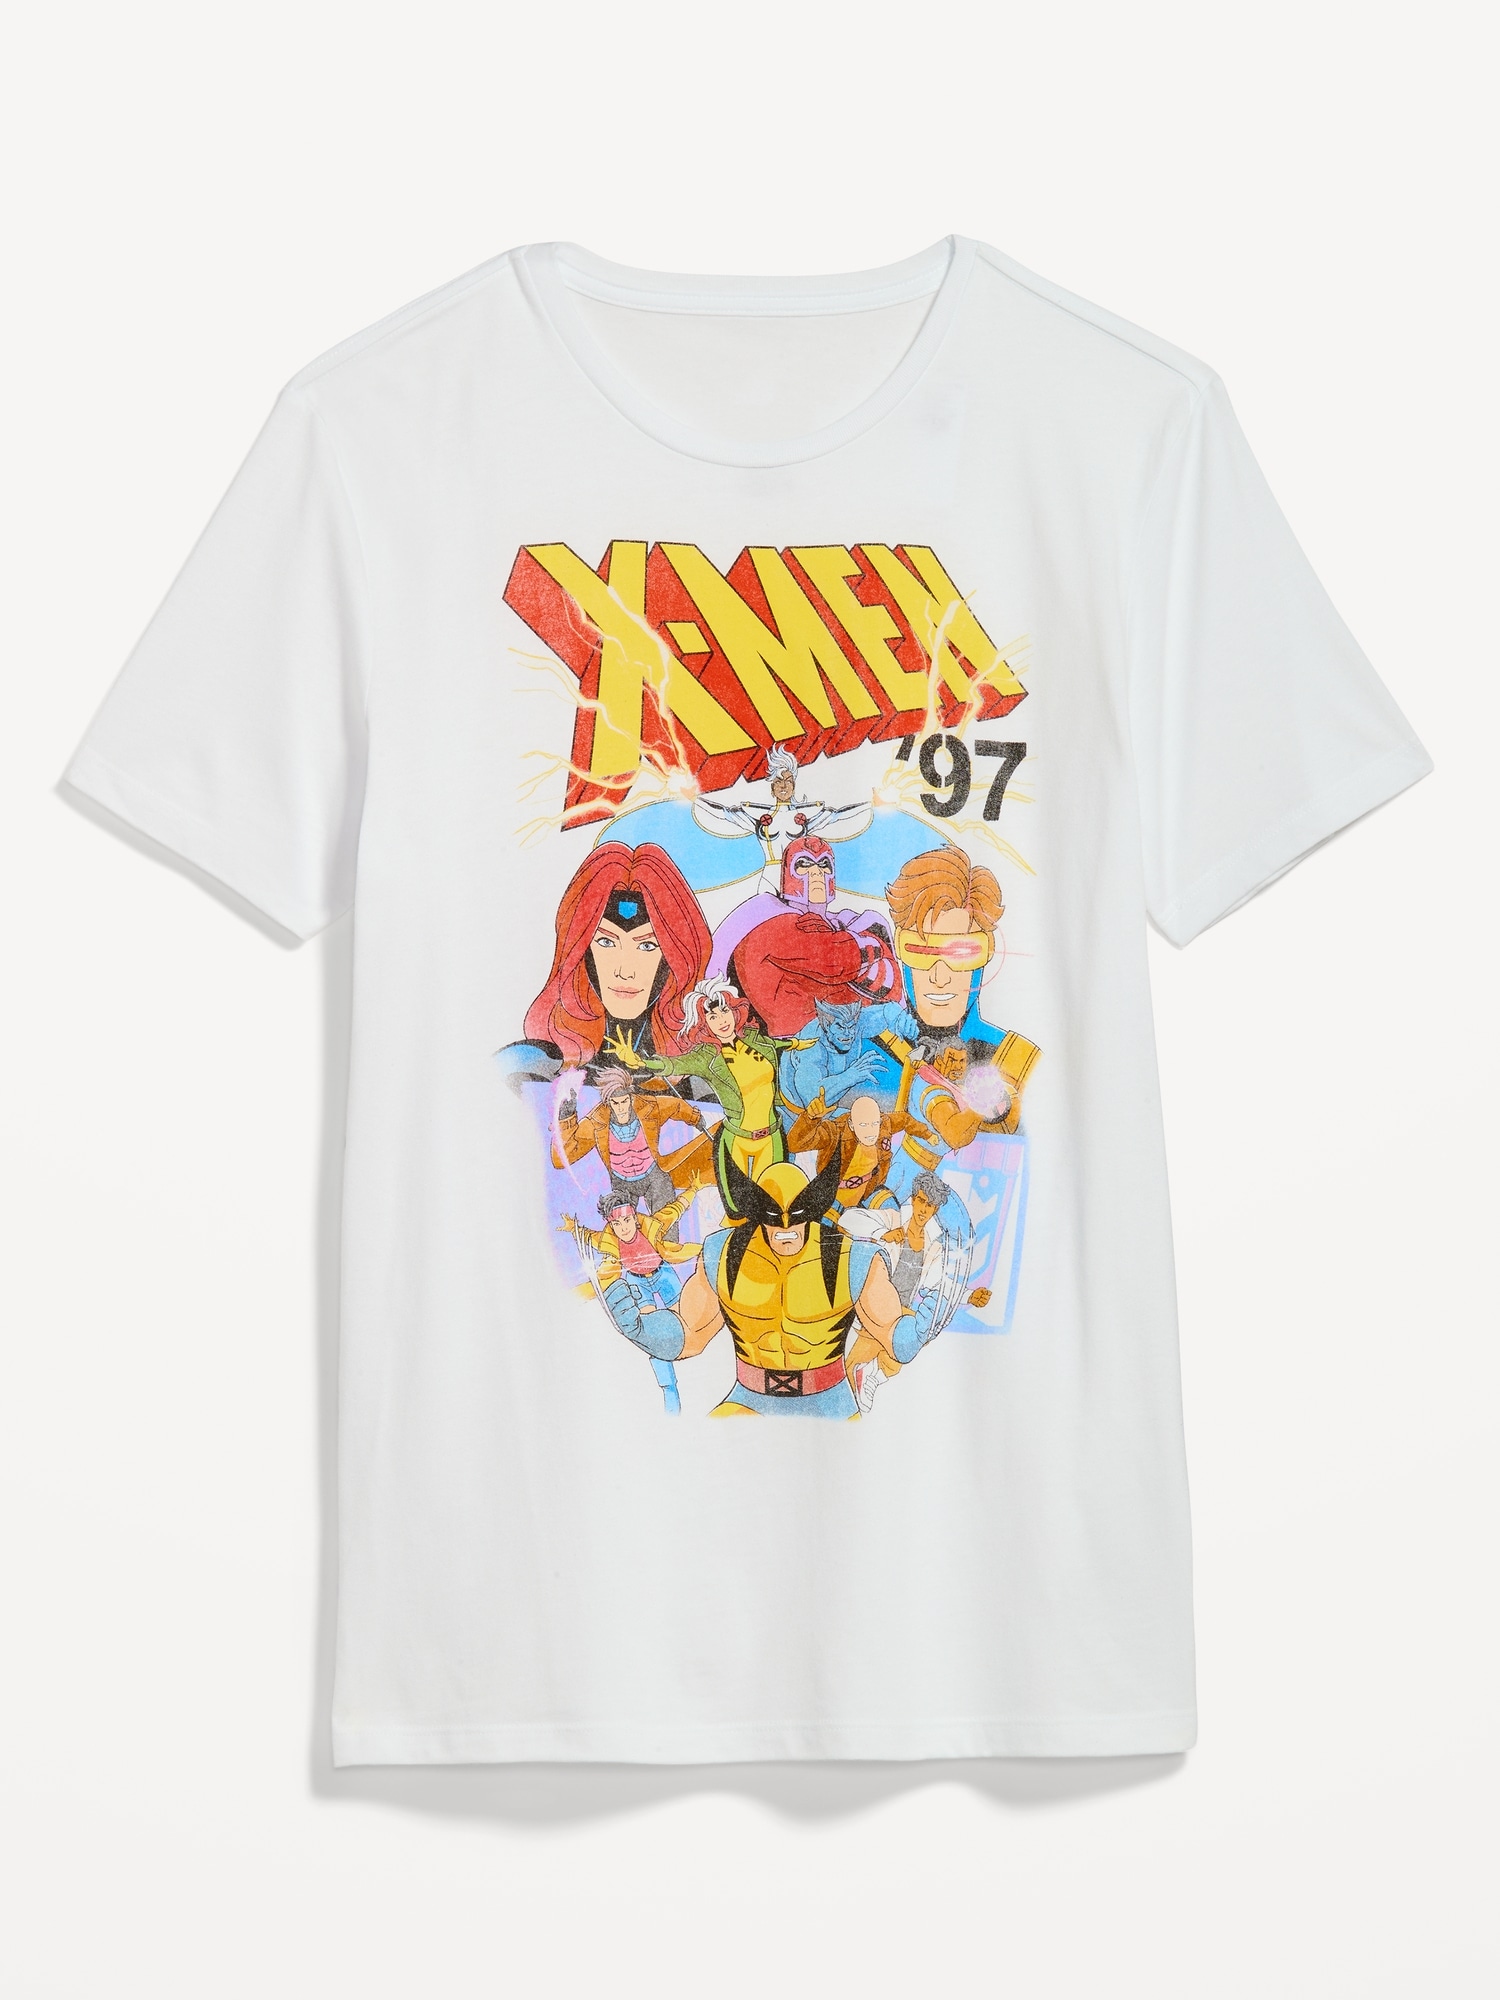 Marvel X-Men Gender-Neutral T-Shirt for Adults